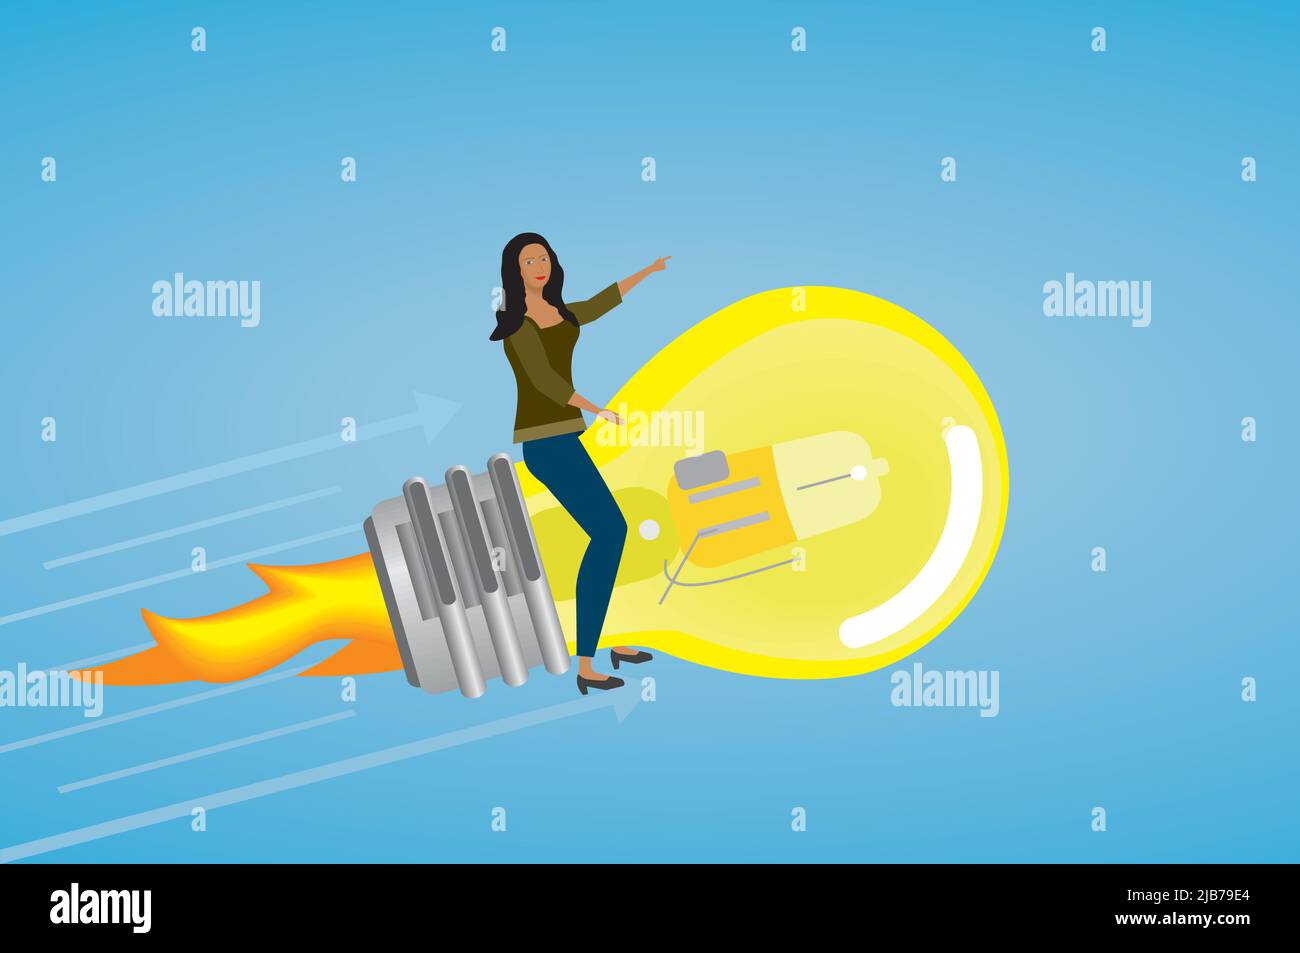 Woman flying on light bulb rocket. Dimension 16:9. Vector illustration. Stock Vector